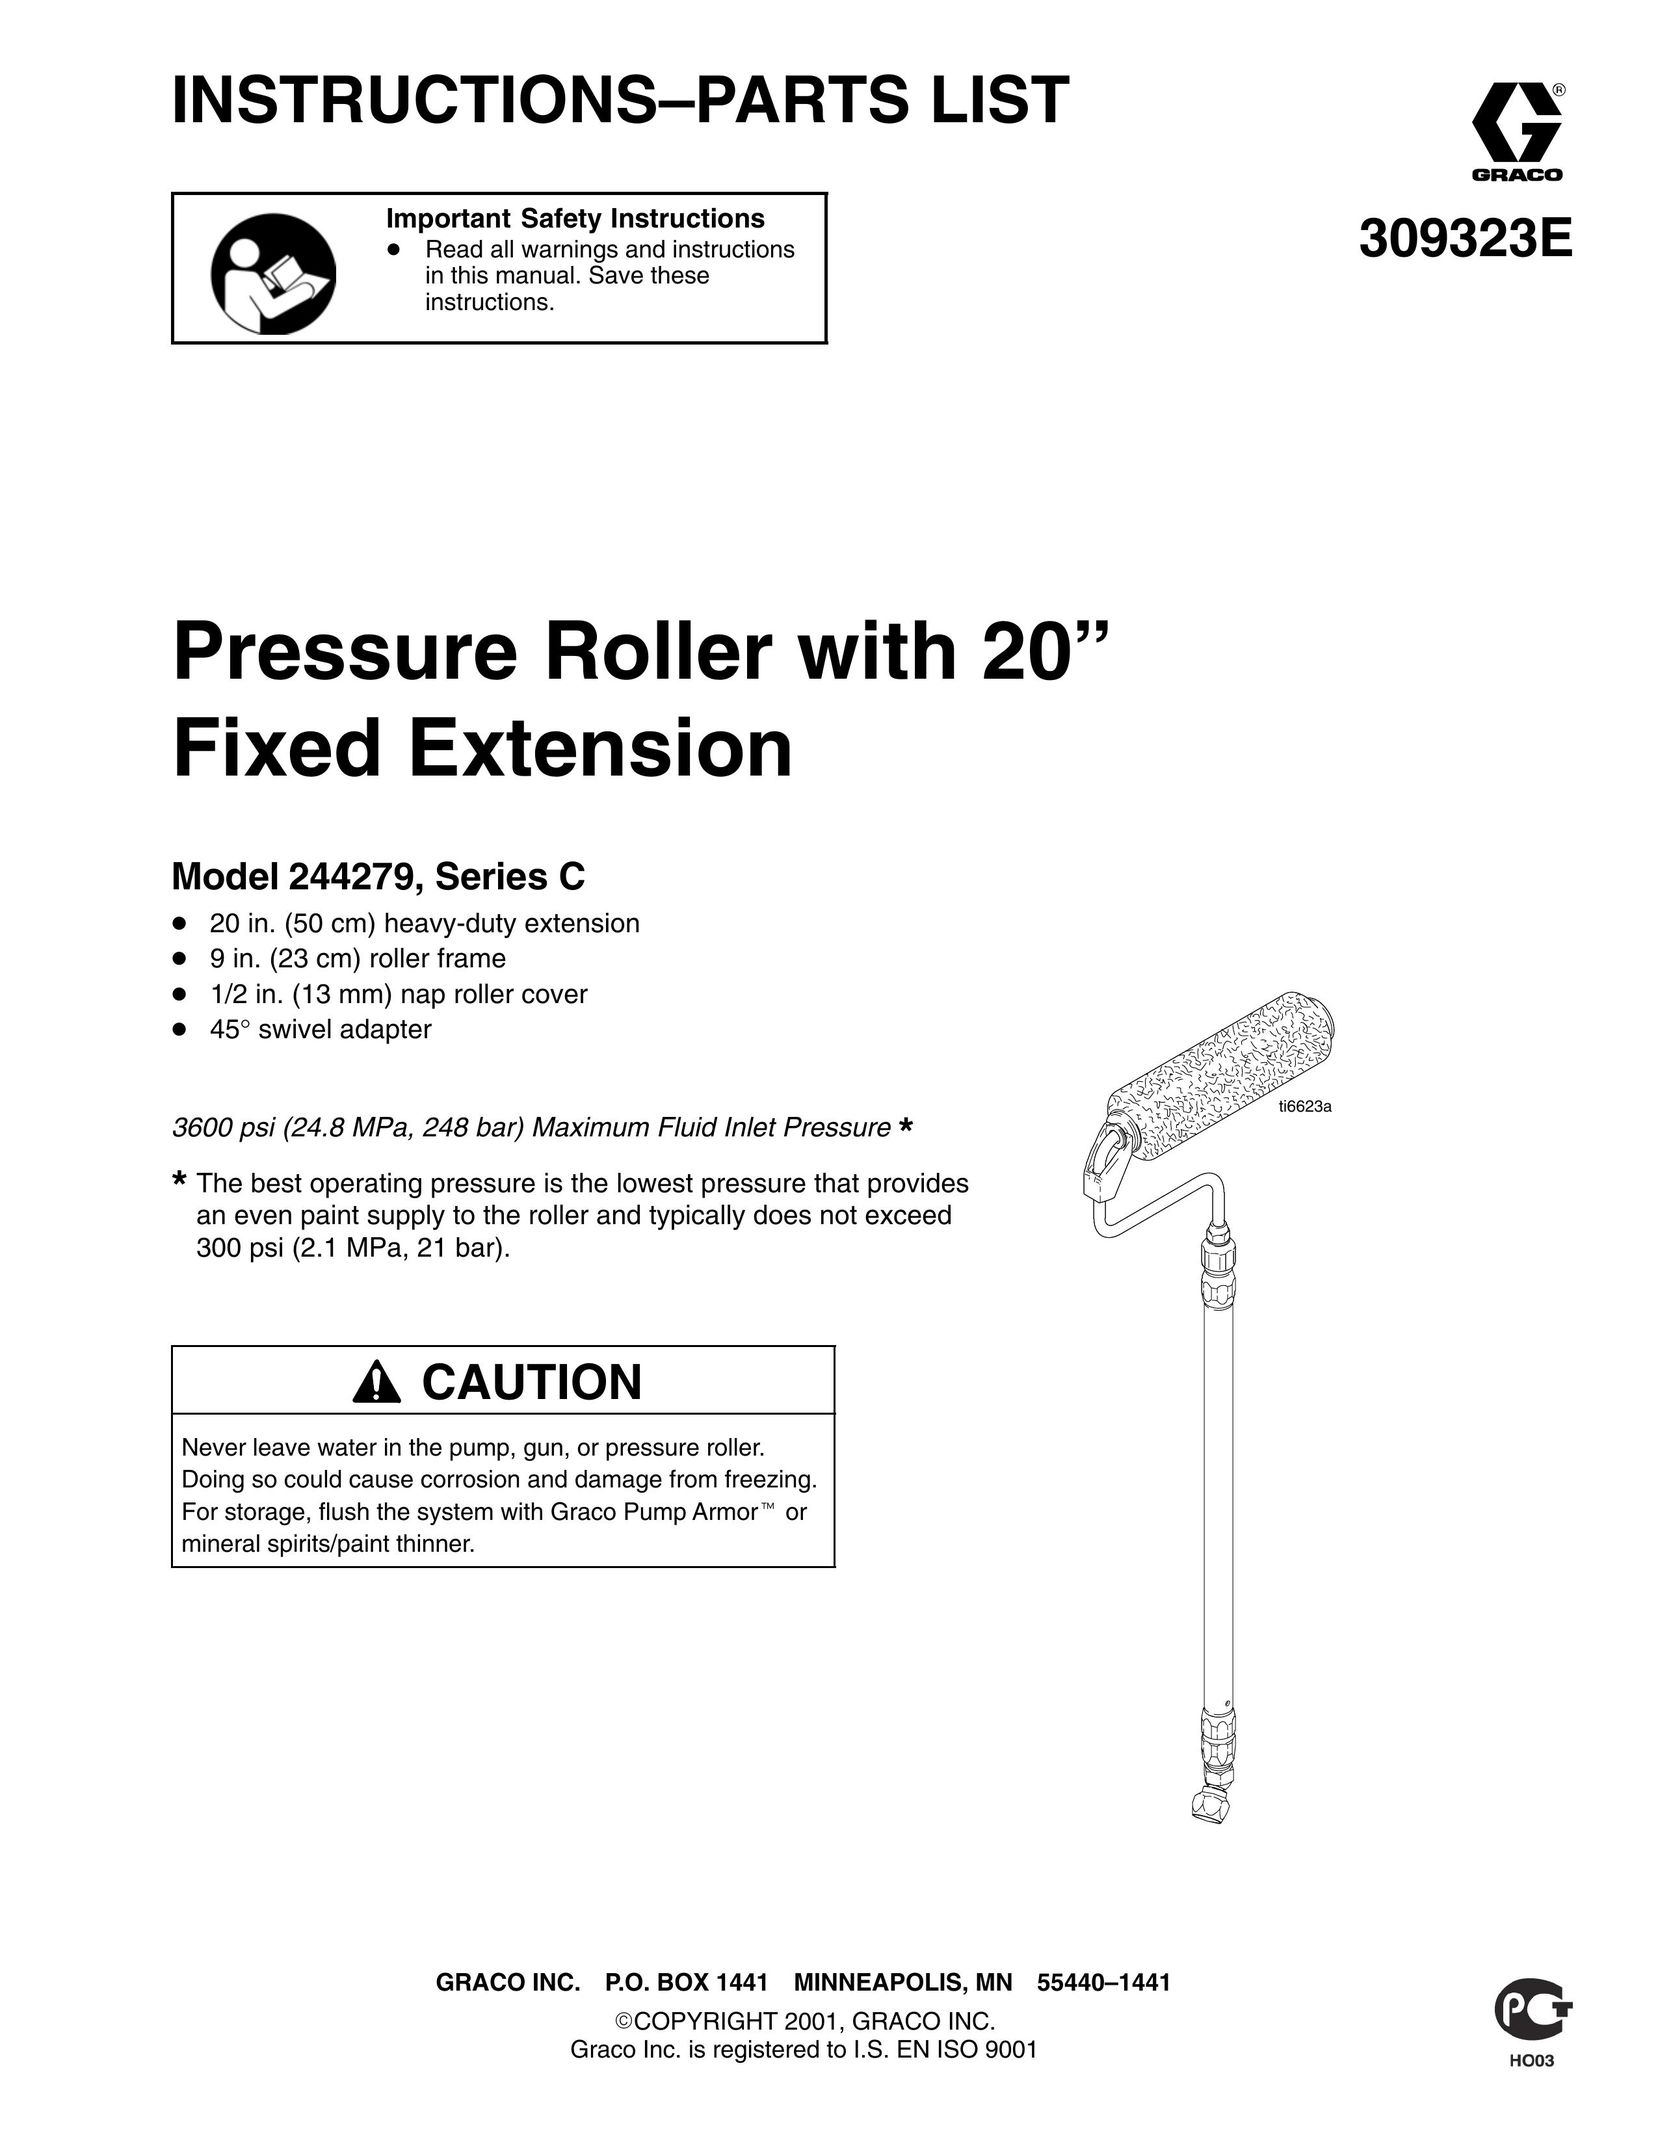 Graco Inc. 244279 Power Roller User Manual